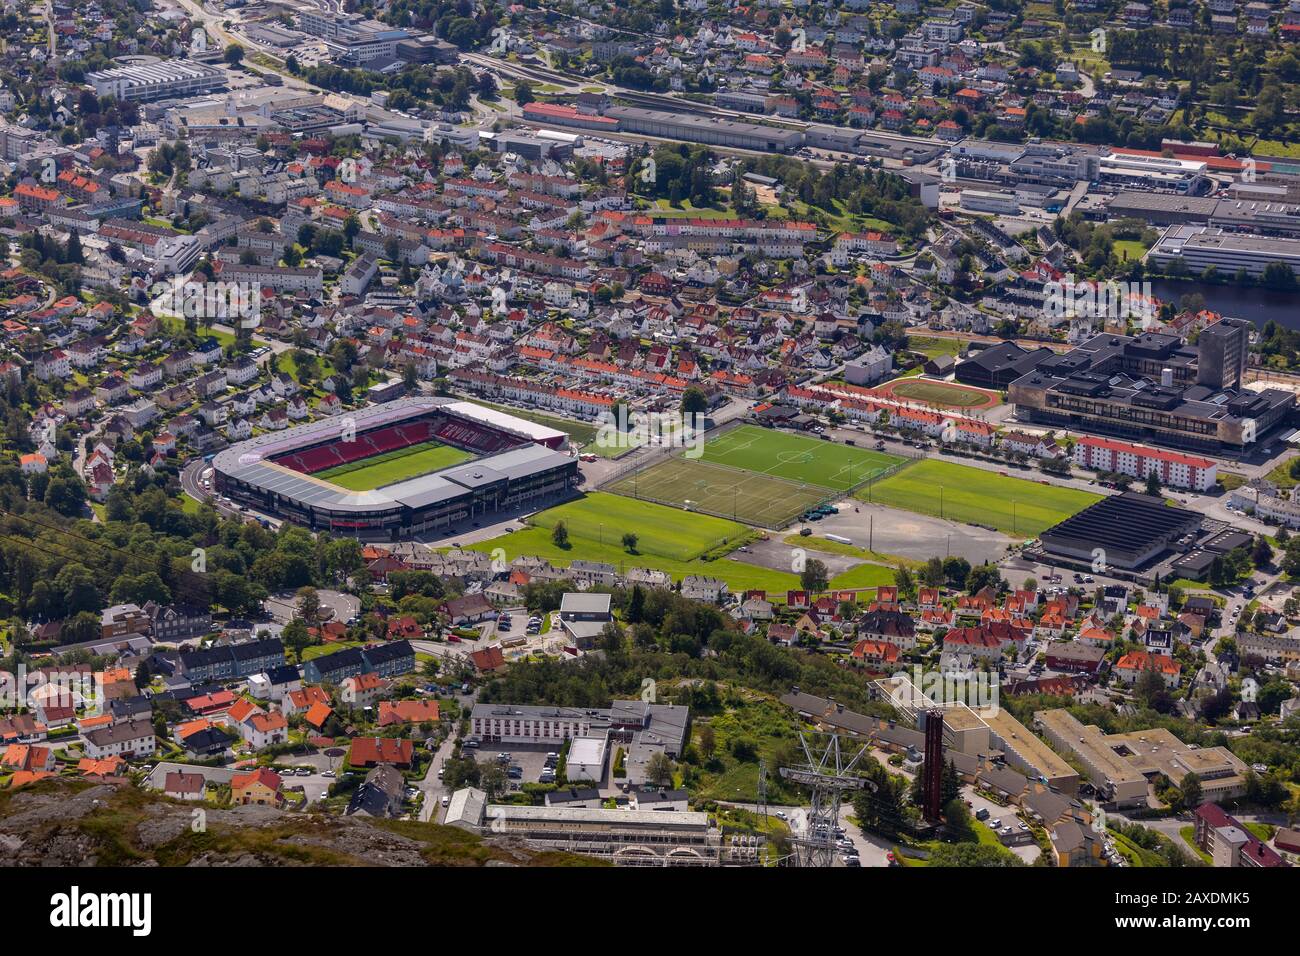 BERGEN, NORWAY - Aerial view of Brann Stadion, a football stadium, and neighborhood. Stock Photo